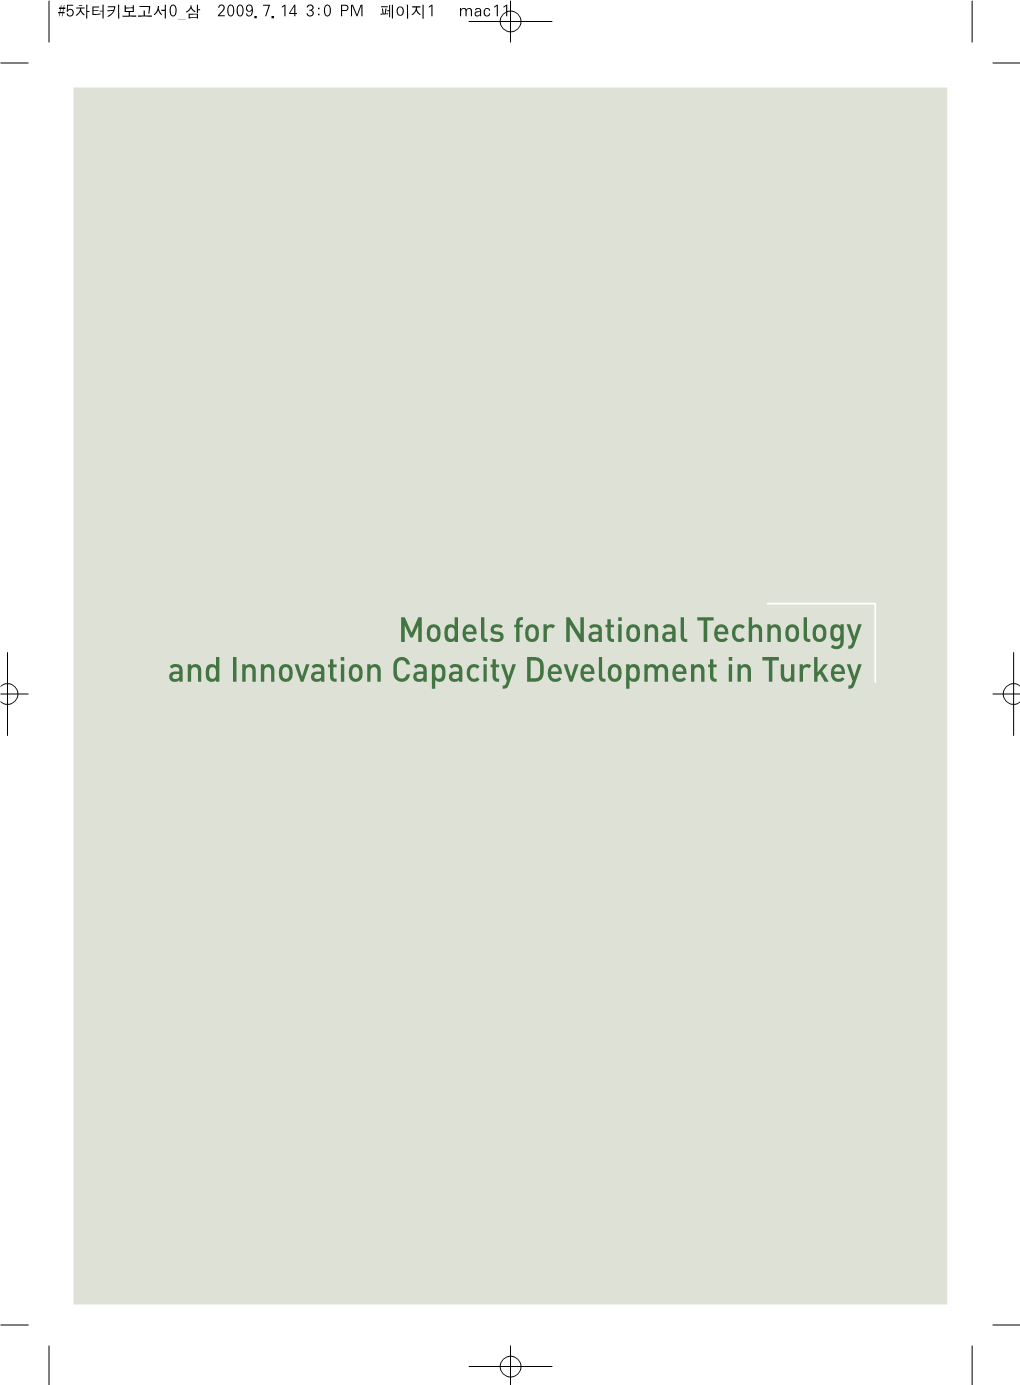 Models for National Technology and Innovation Capacity Development in Turkey #5차터키보고서0 삼 2009.7.14 3:0 PM 페이지2 Mac11